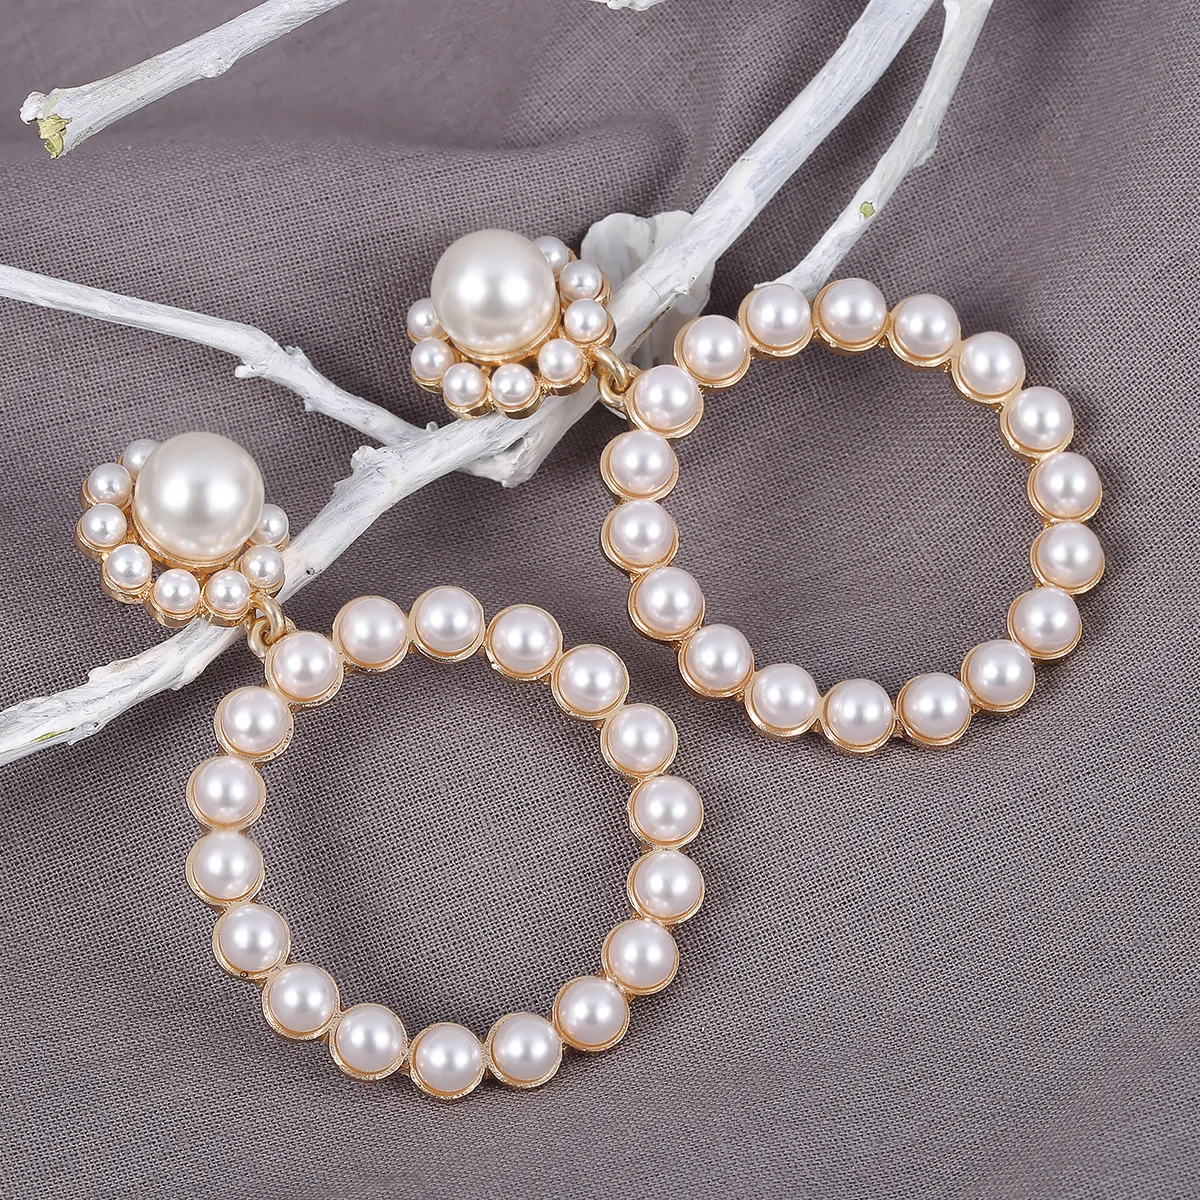 Qingwen Trendy Crystal Round Pendant Drop Earrings For Women Fashion Pearl Charm Statement Jewelry Wedding Earrings Female